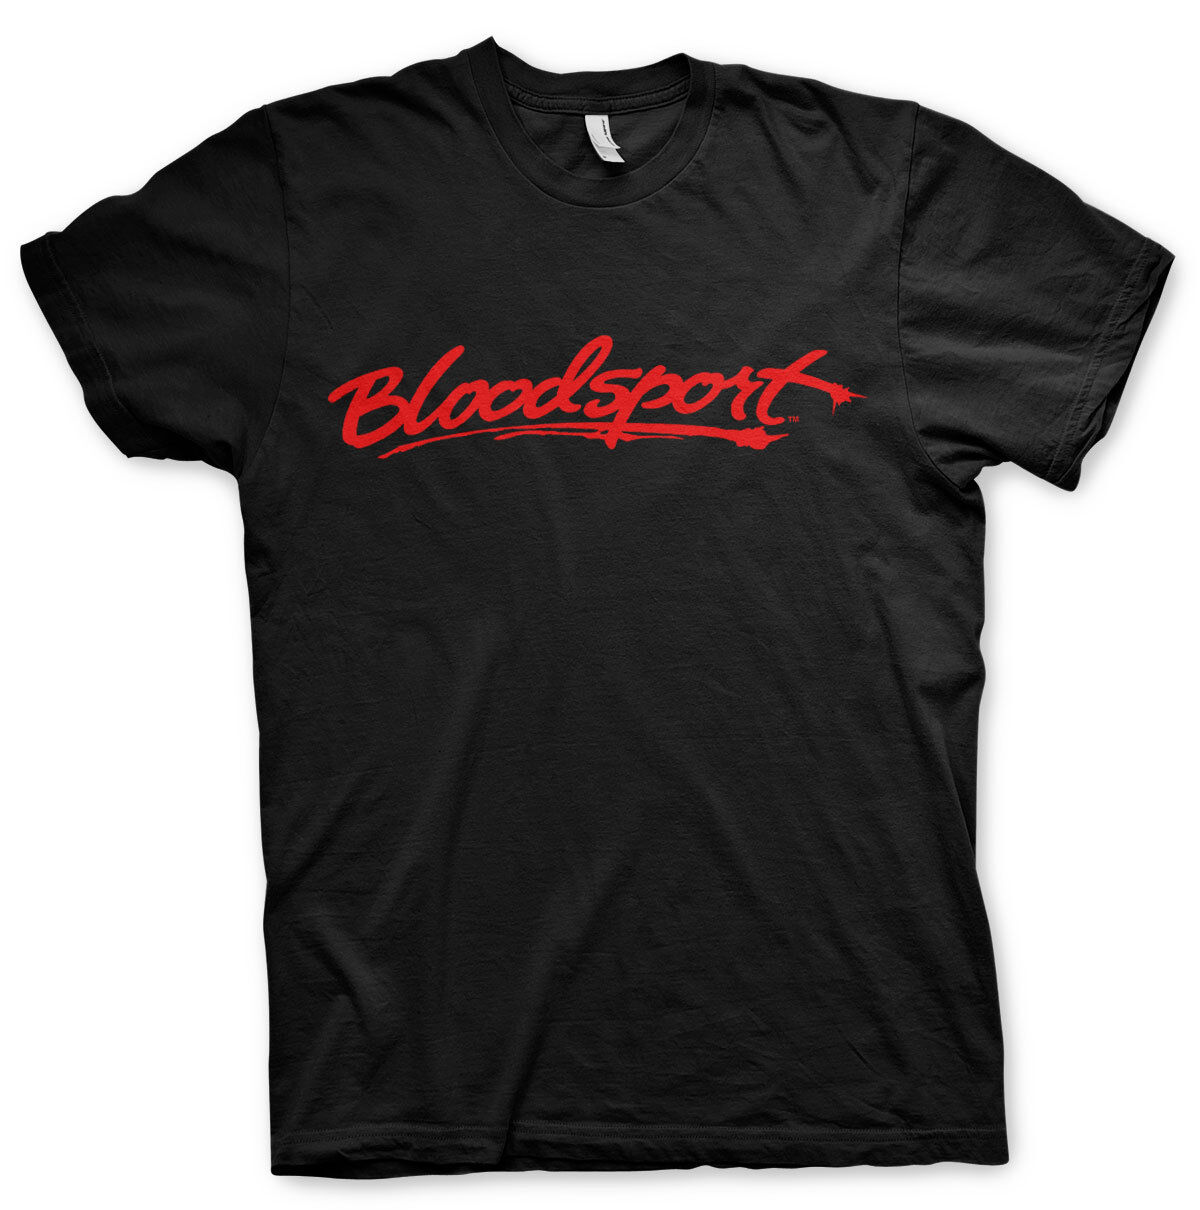 Officially Licensed Bloodsport Logo Men's T-Shirt S-XXL Sizes